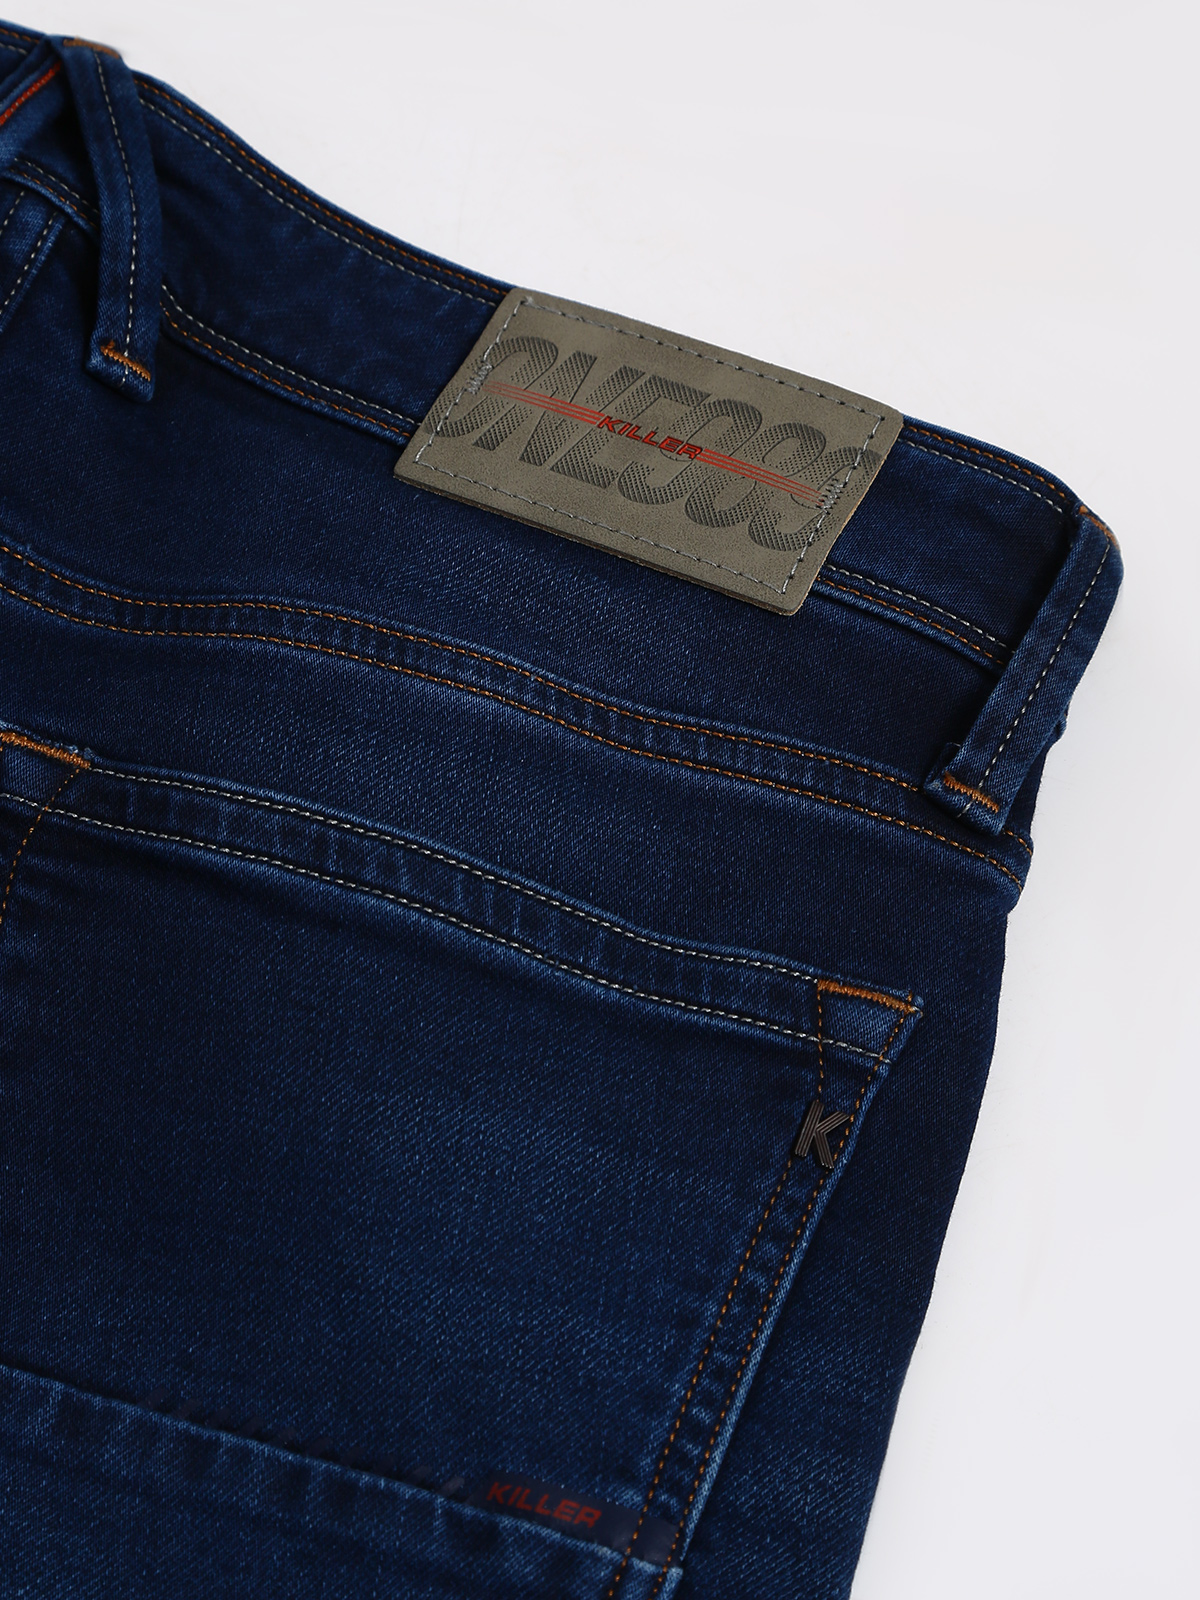 Details more than 191 www killer jeans com best